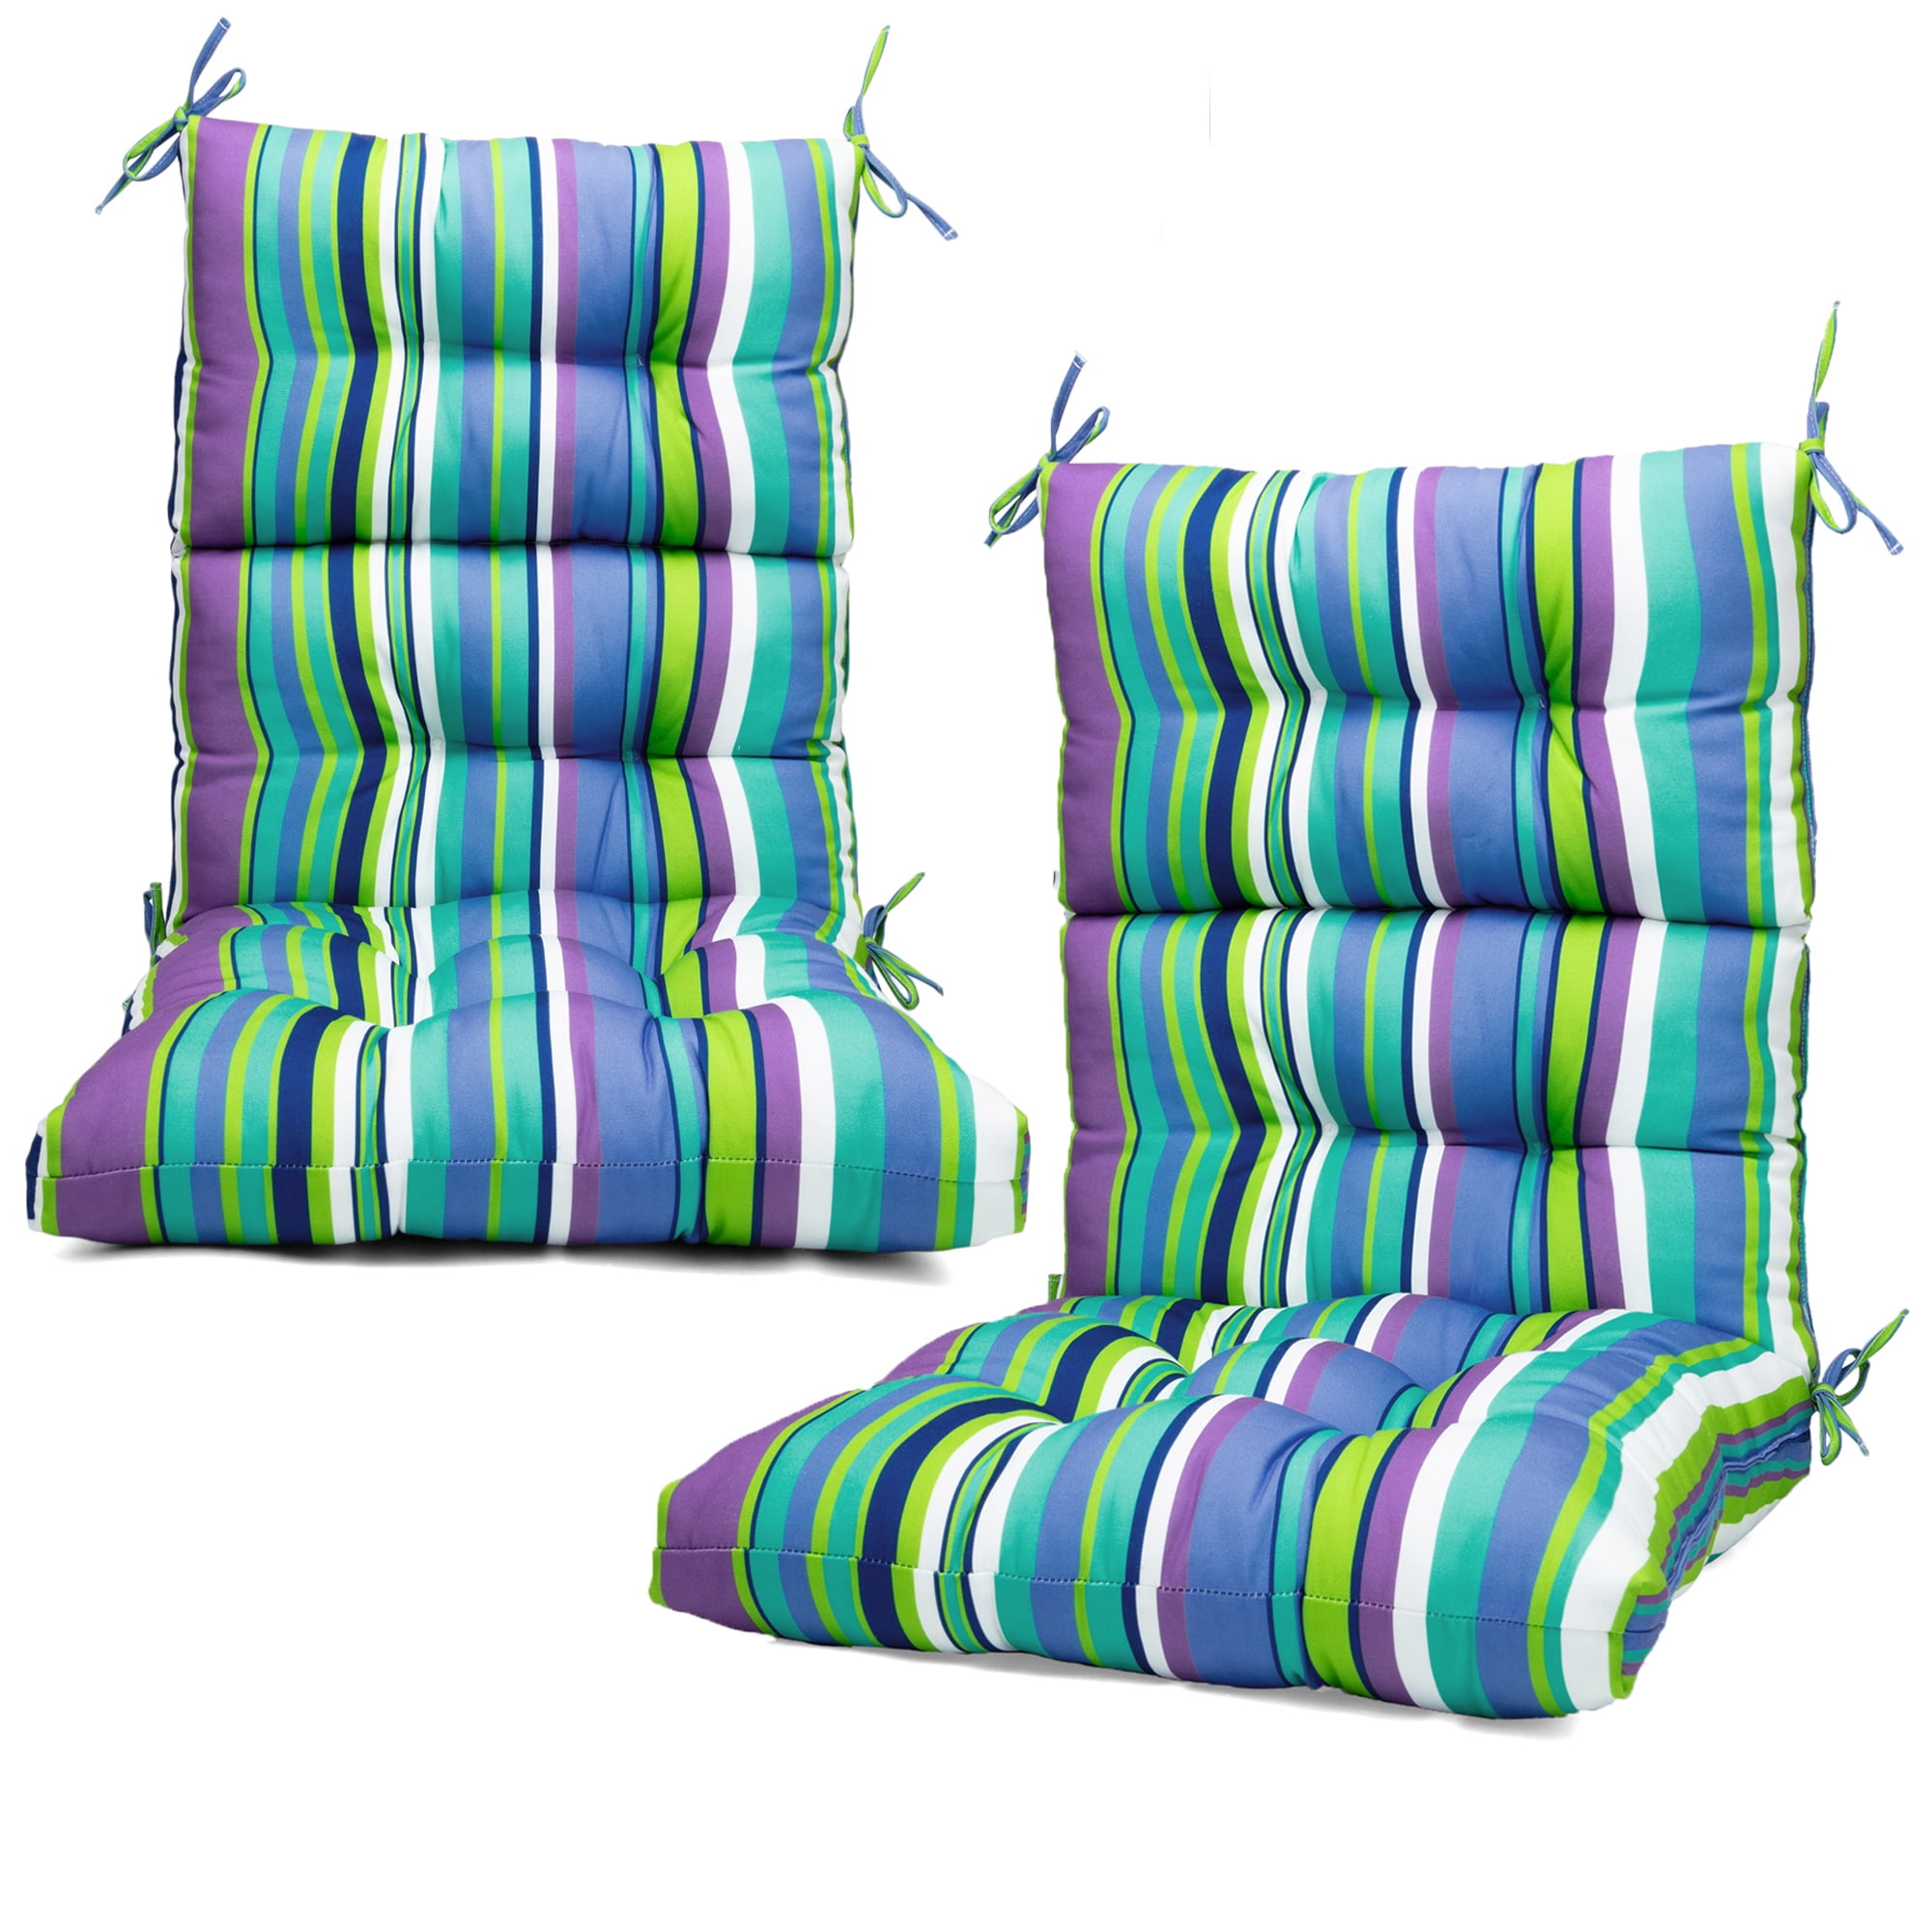 1Pcs, Dark Yours Bath Sun Lounger Cushion Pads Scotland Lattice Portable Garden Patio Thick Relaxer Chair Seat Cover for Travel Holiday Garden Indoor Outdoor